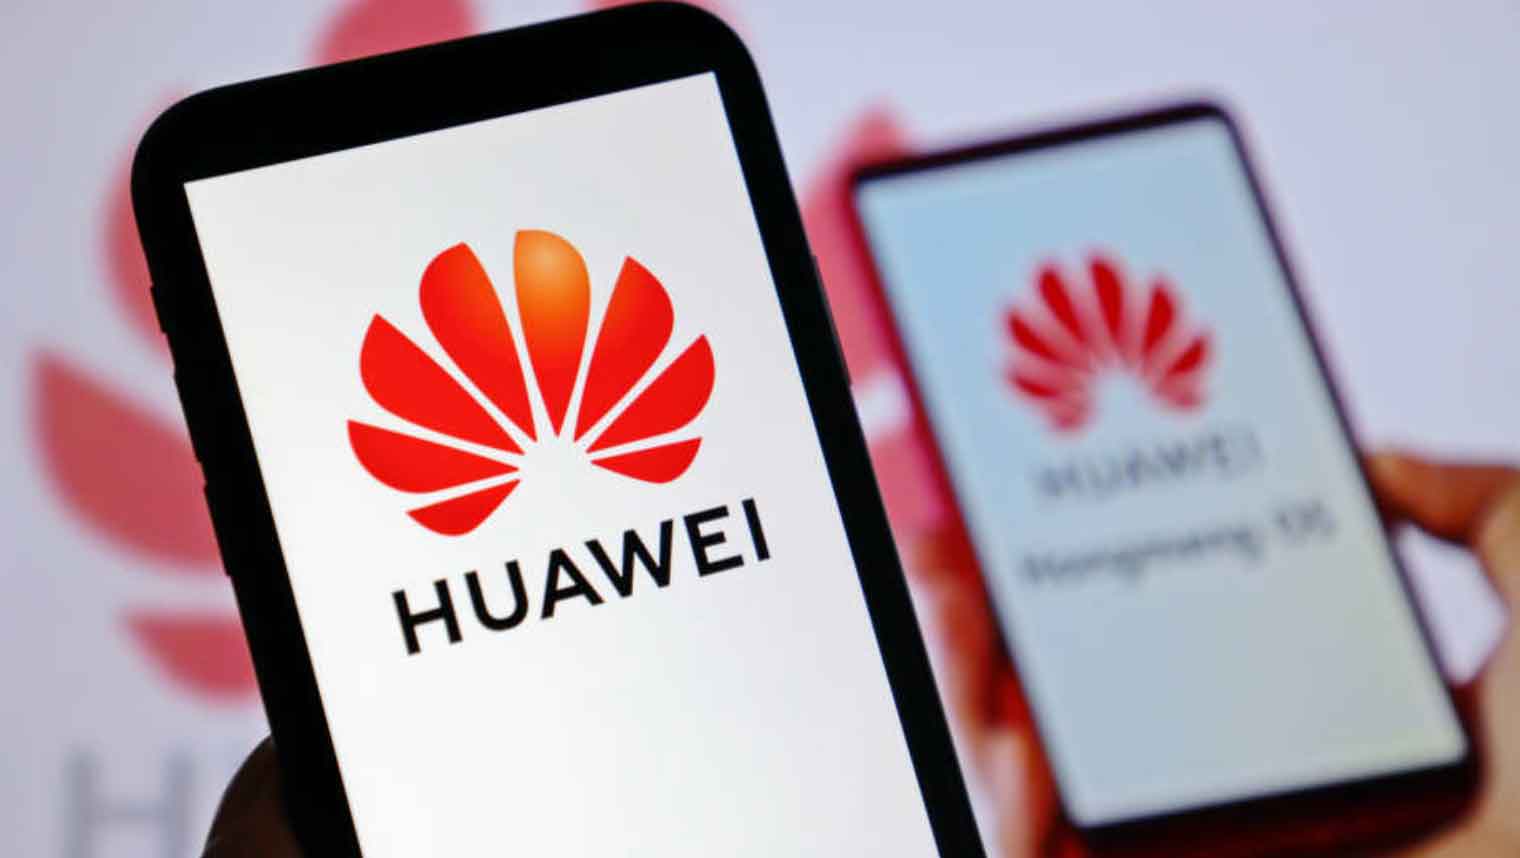 Huawei and Alibaba among companies seeking Chinese deepfake approvals